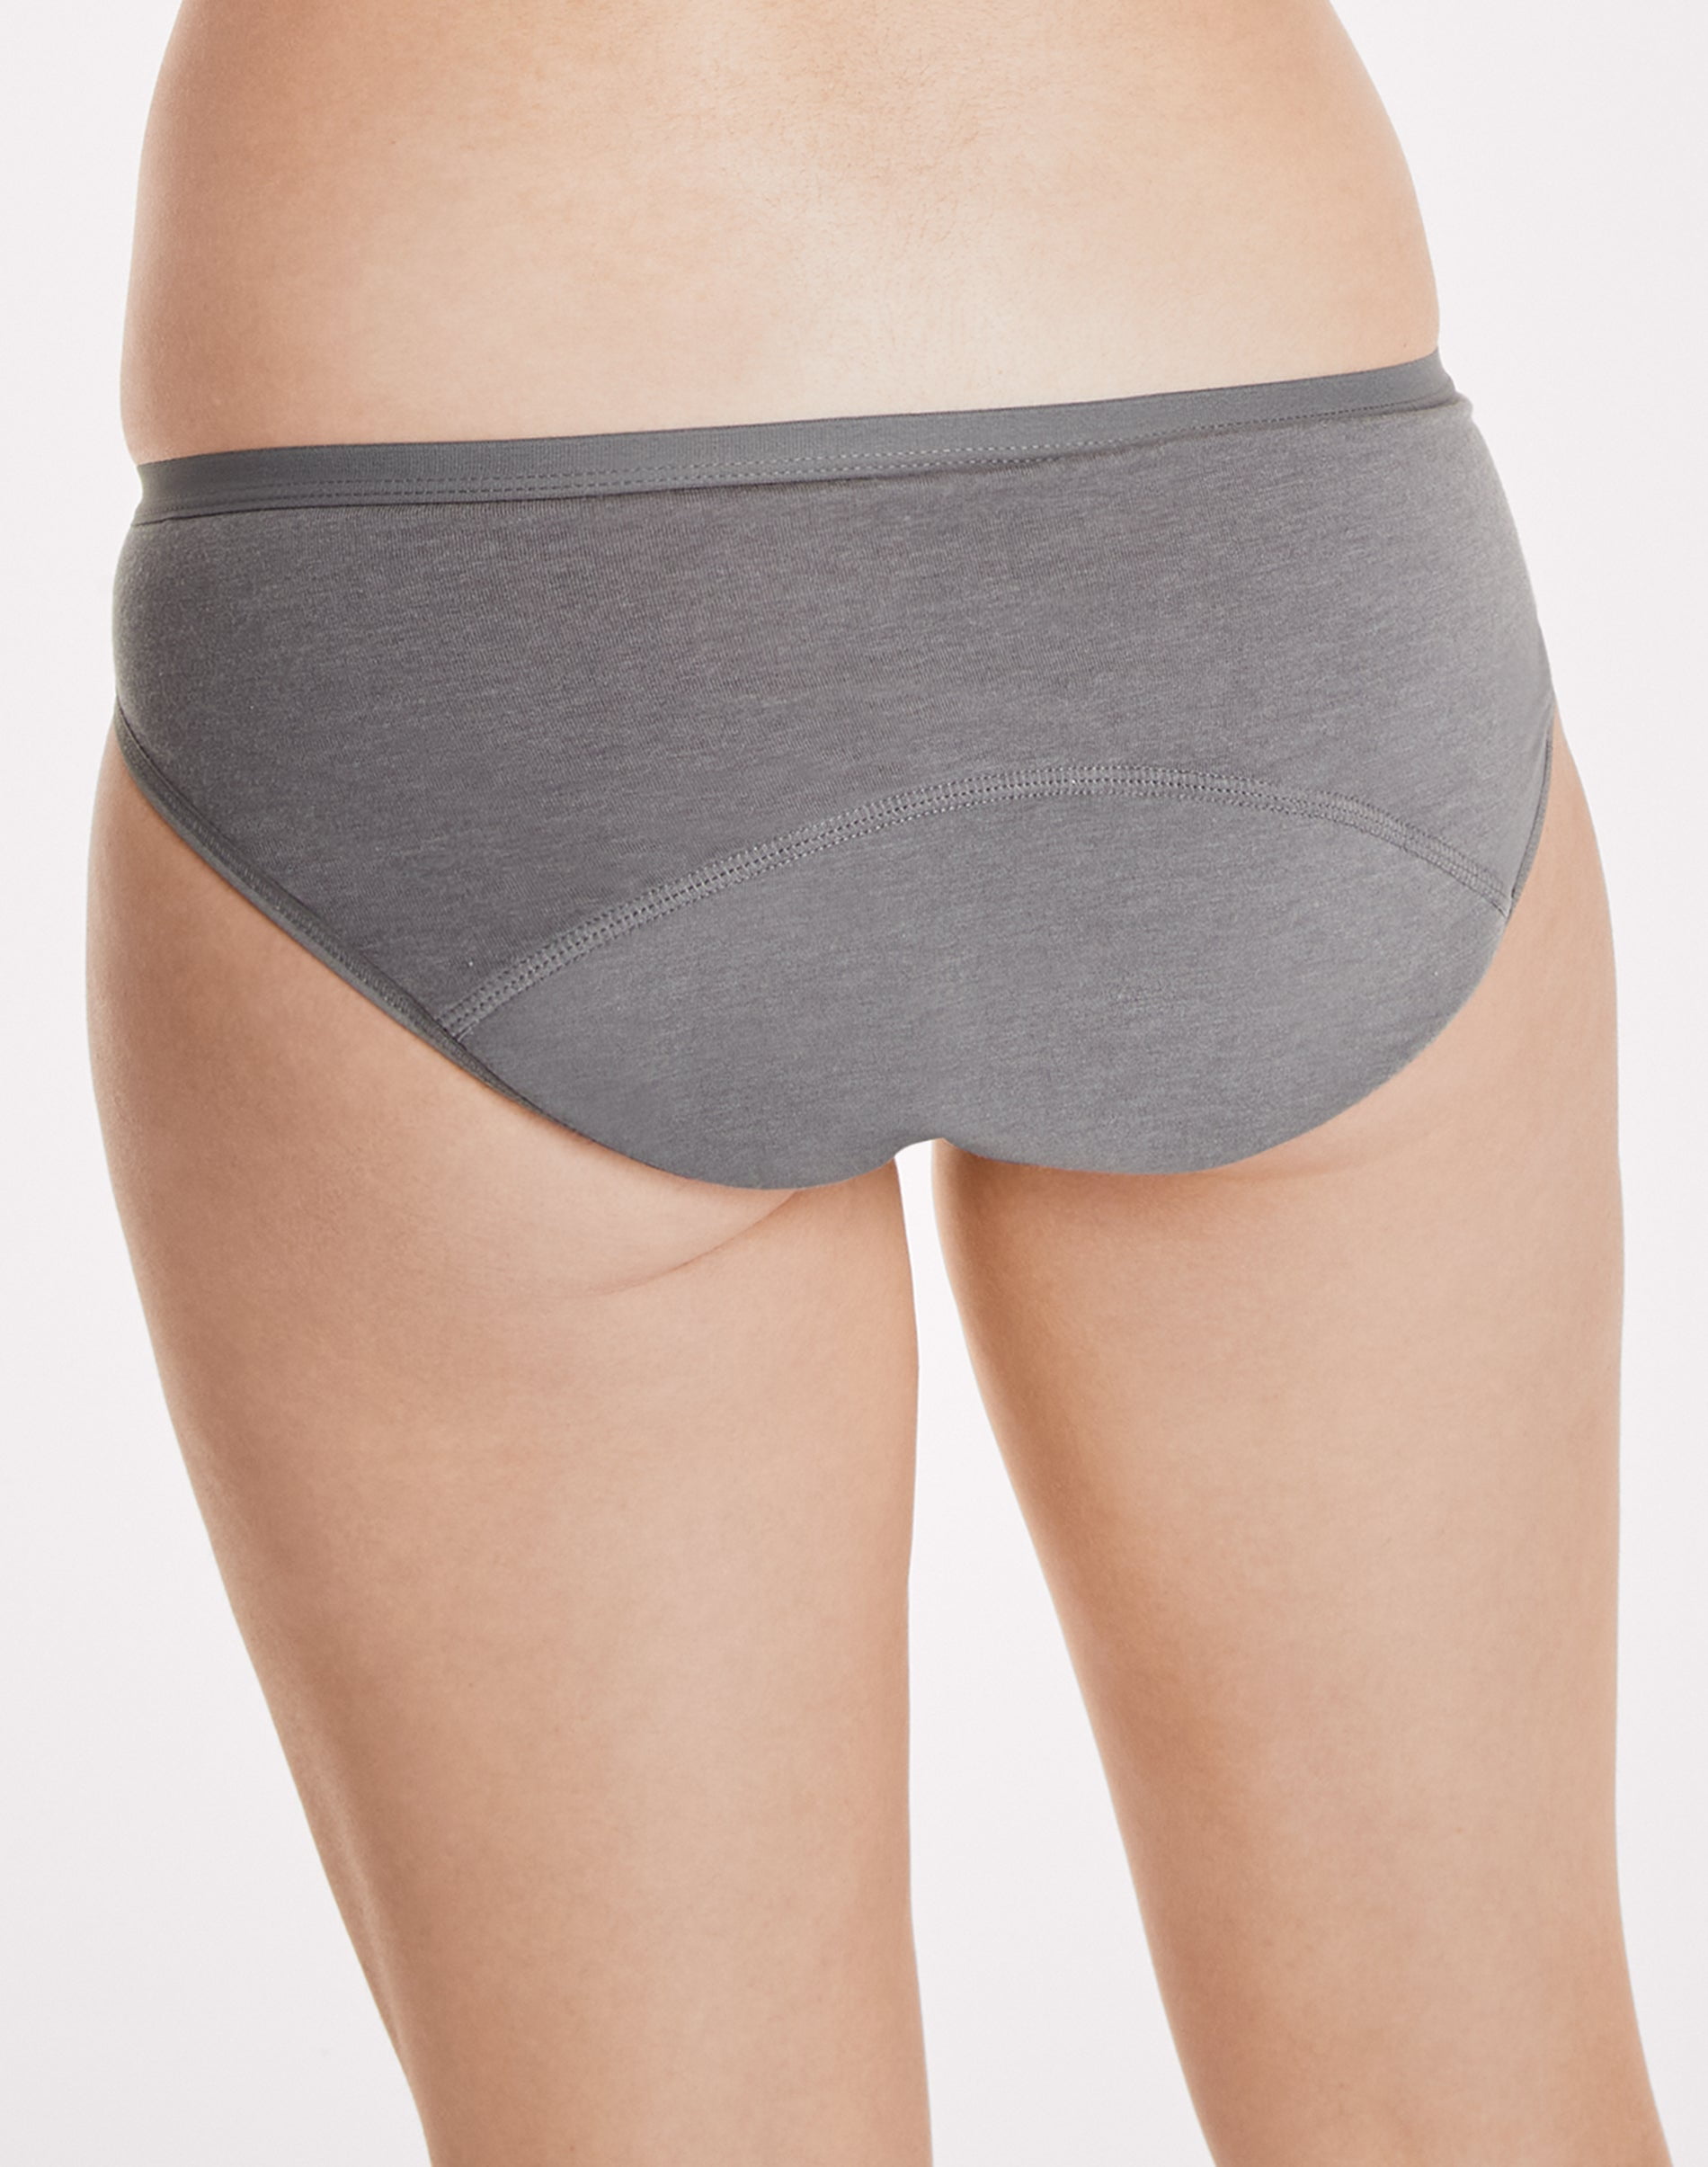 Hanes Comfort, Period. Women's Bikini Underwear, Moderate Leaks, Neutrals,  3-Pack Assorted 5 